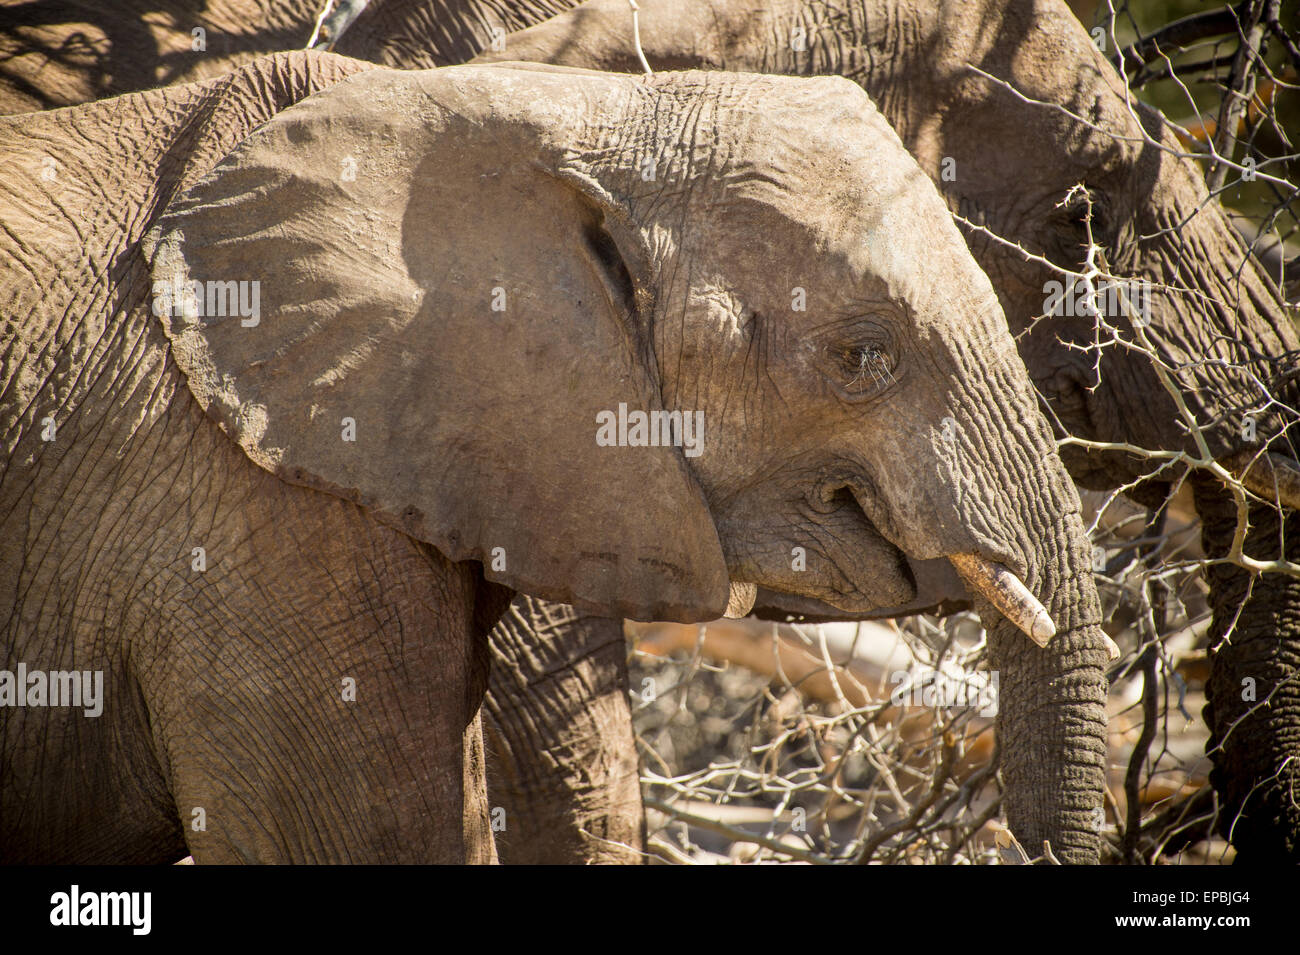 Africa, Namibia. Close up of elephants grazing. Stock Photo